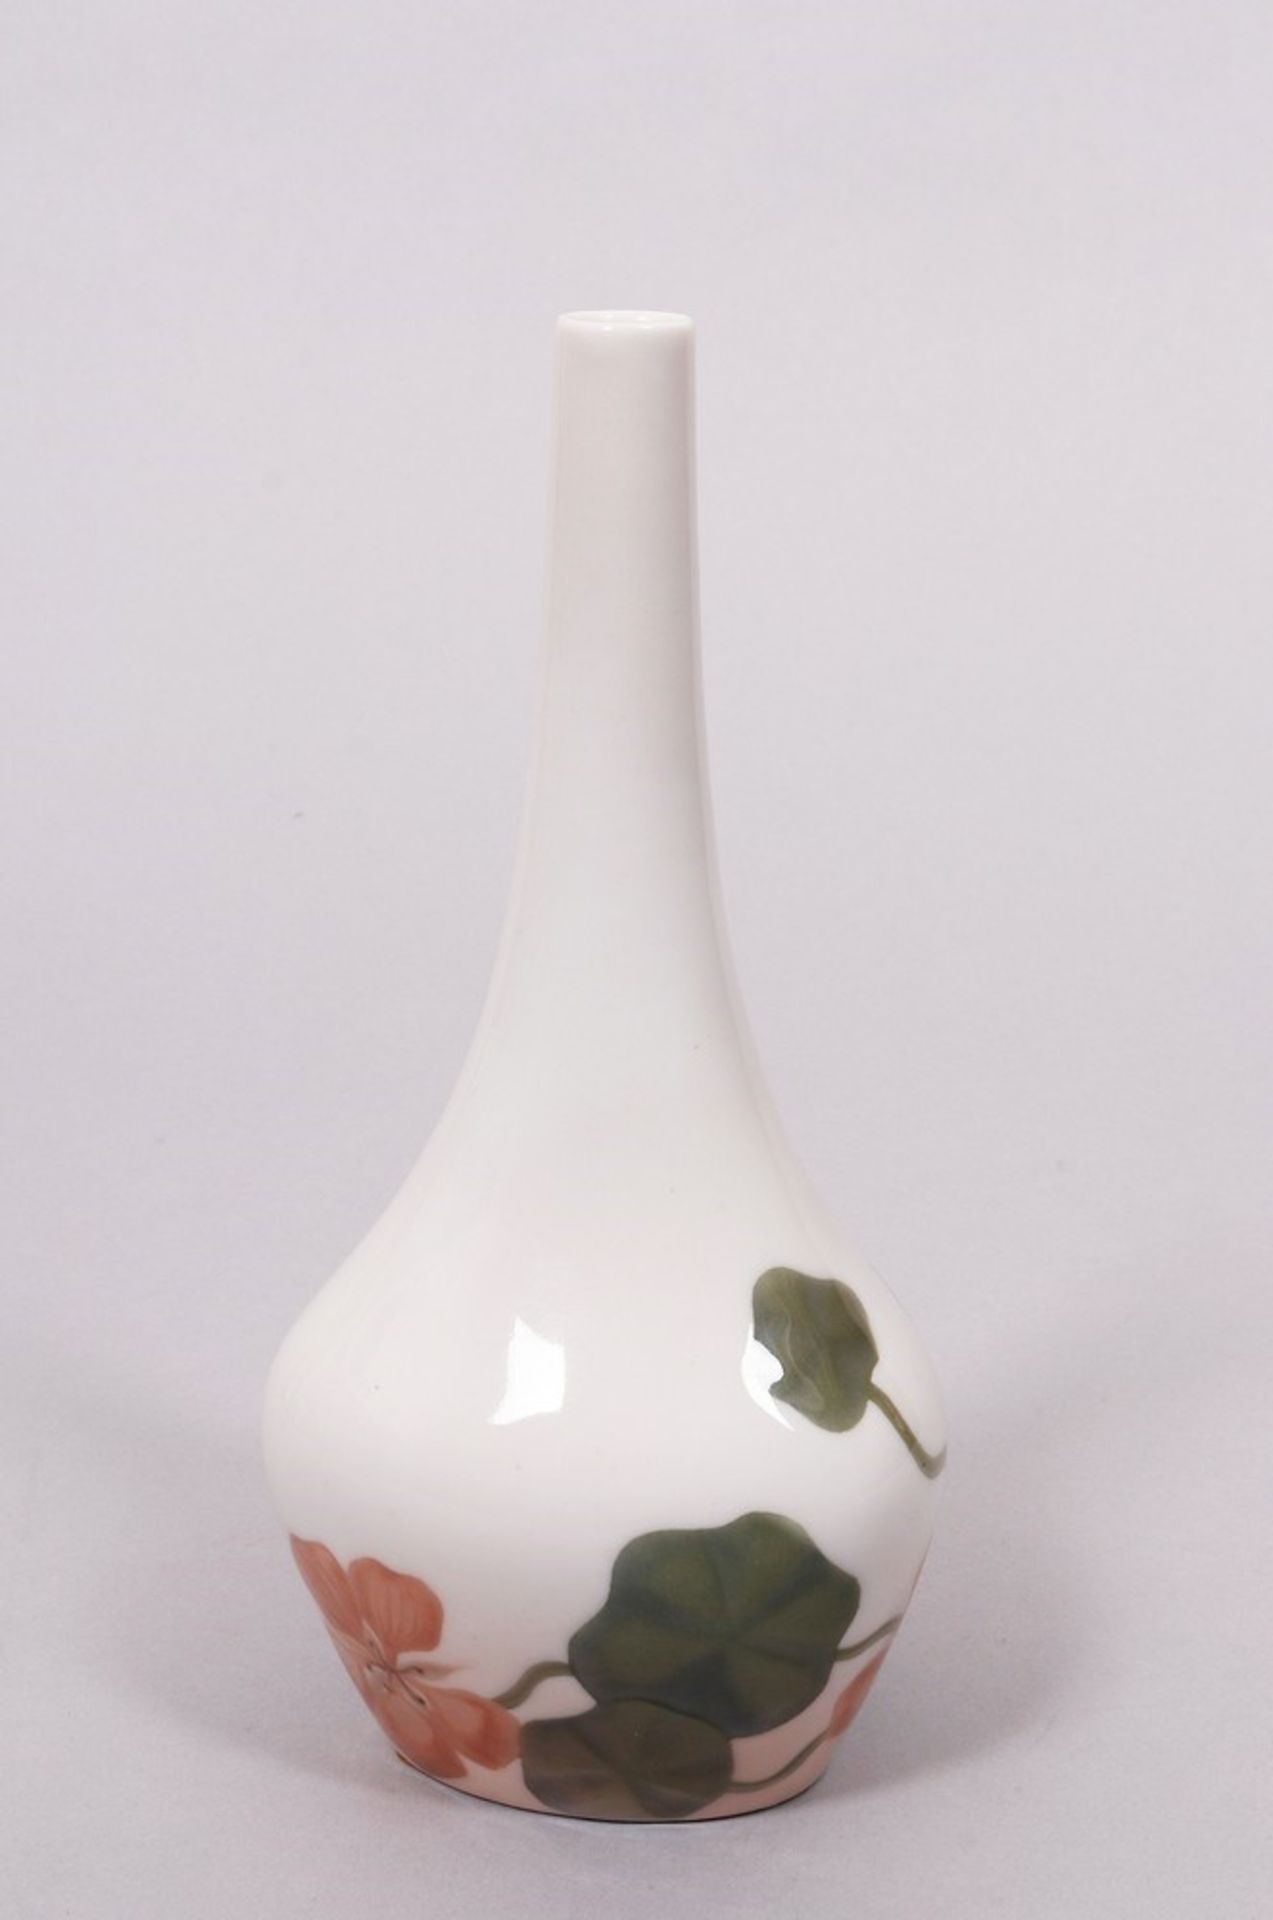 Small narrow neck vase, Bing & Grondahl, 1915-47 - Image 3 of 4